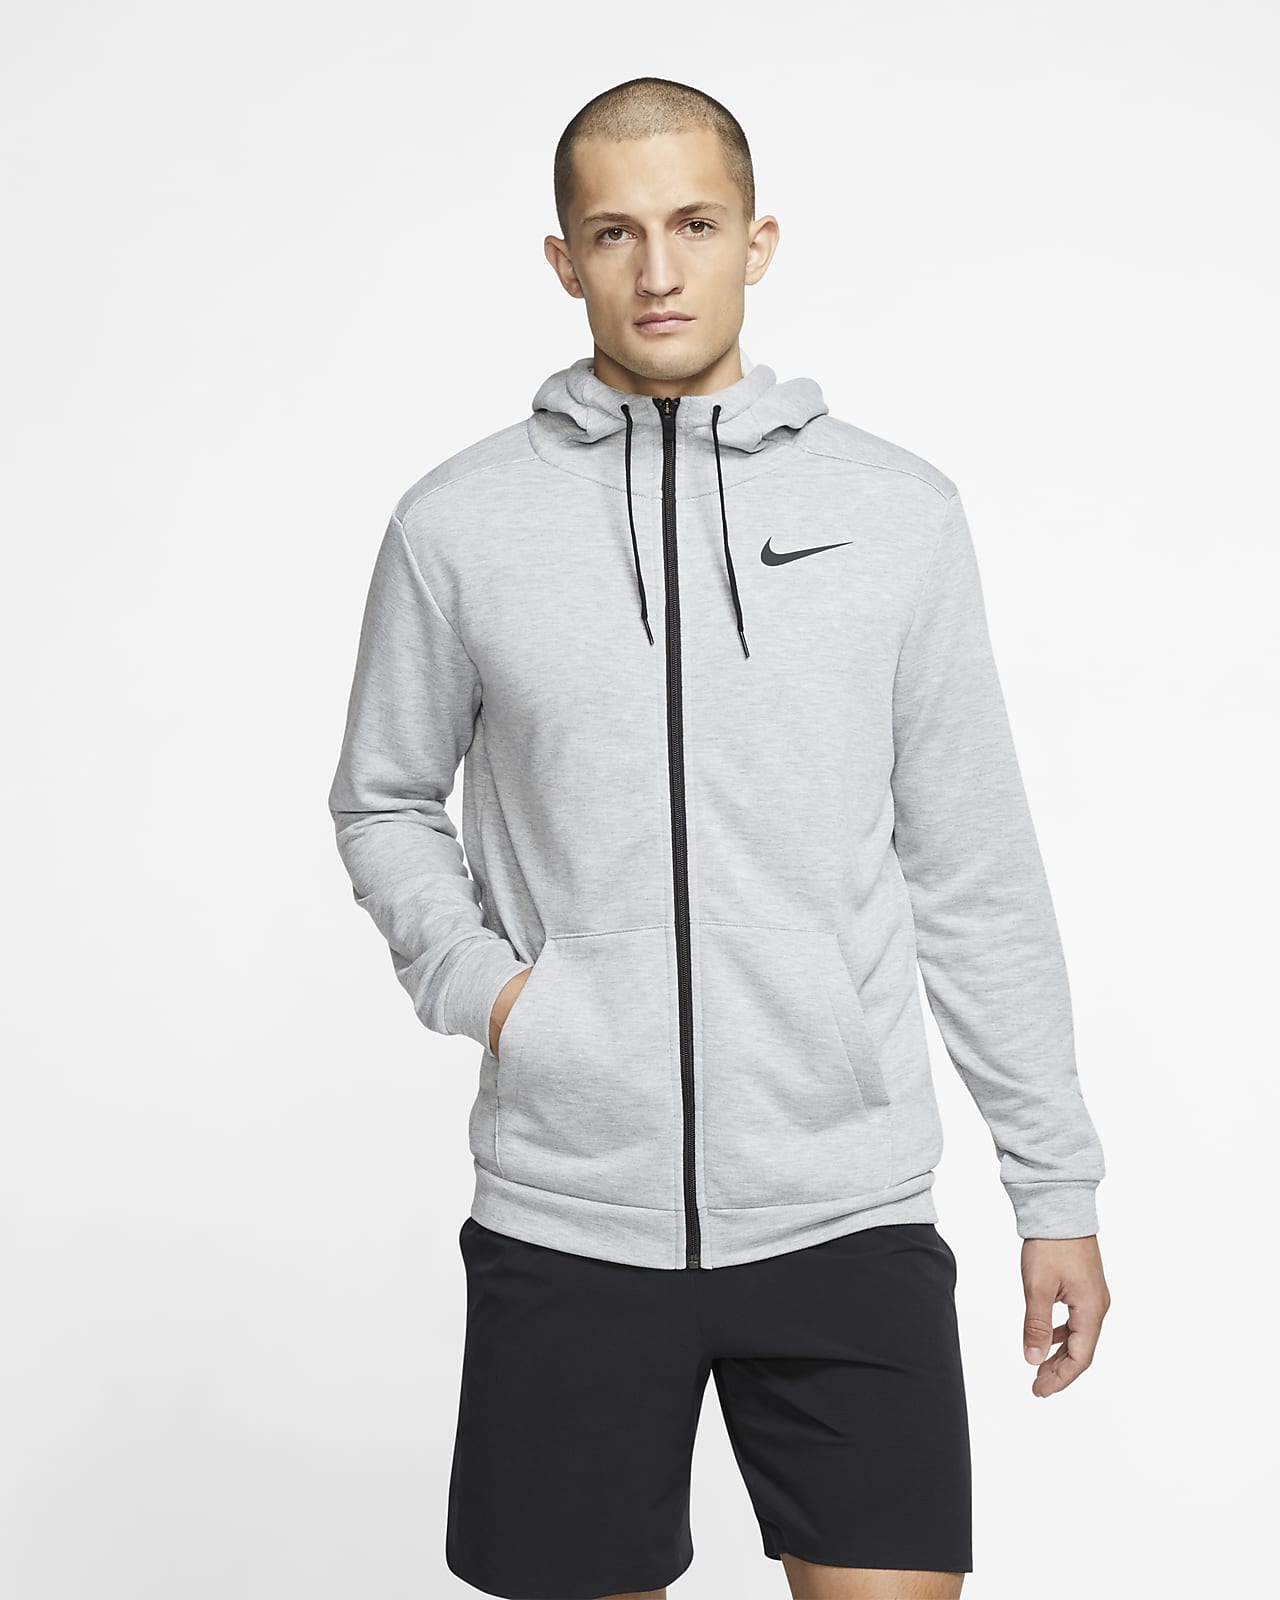 Nike Dri-FIT Men's Full-Zip Training Hoodie